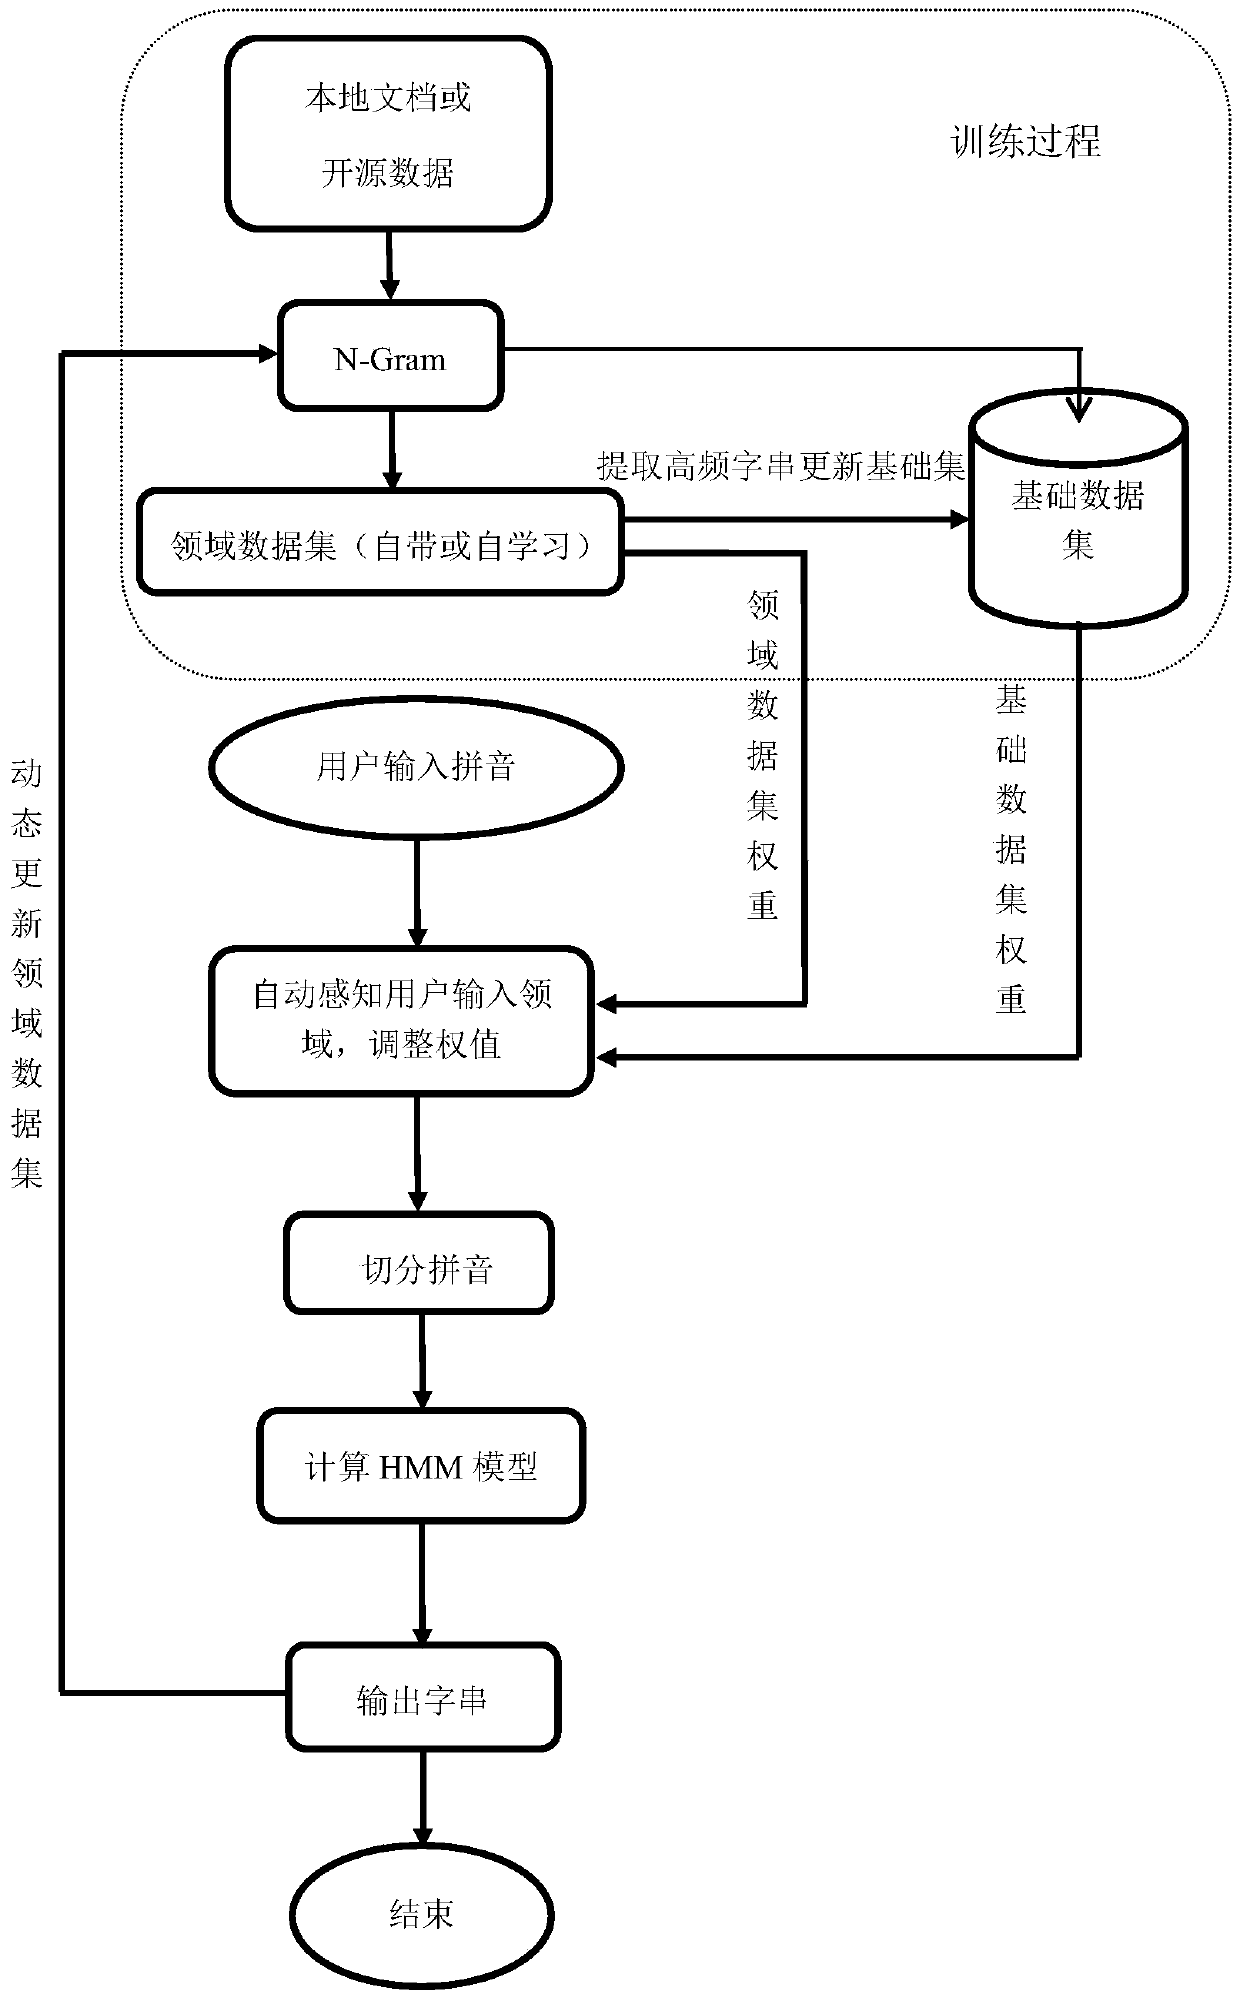 An Adaptive Input Method Based on Text Documents